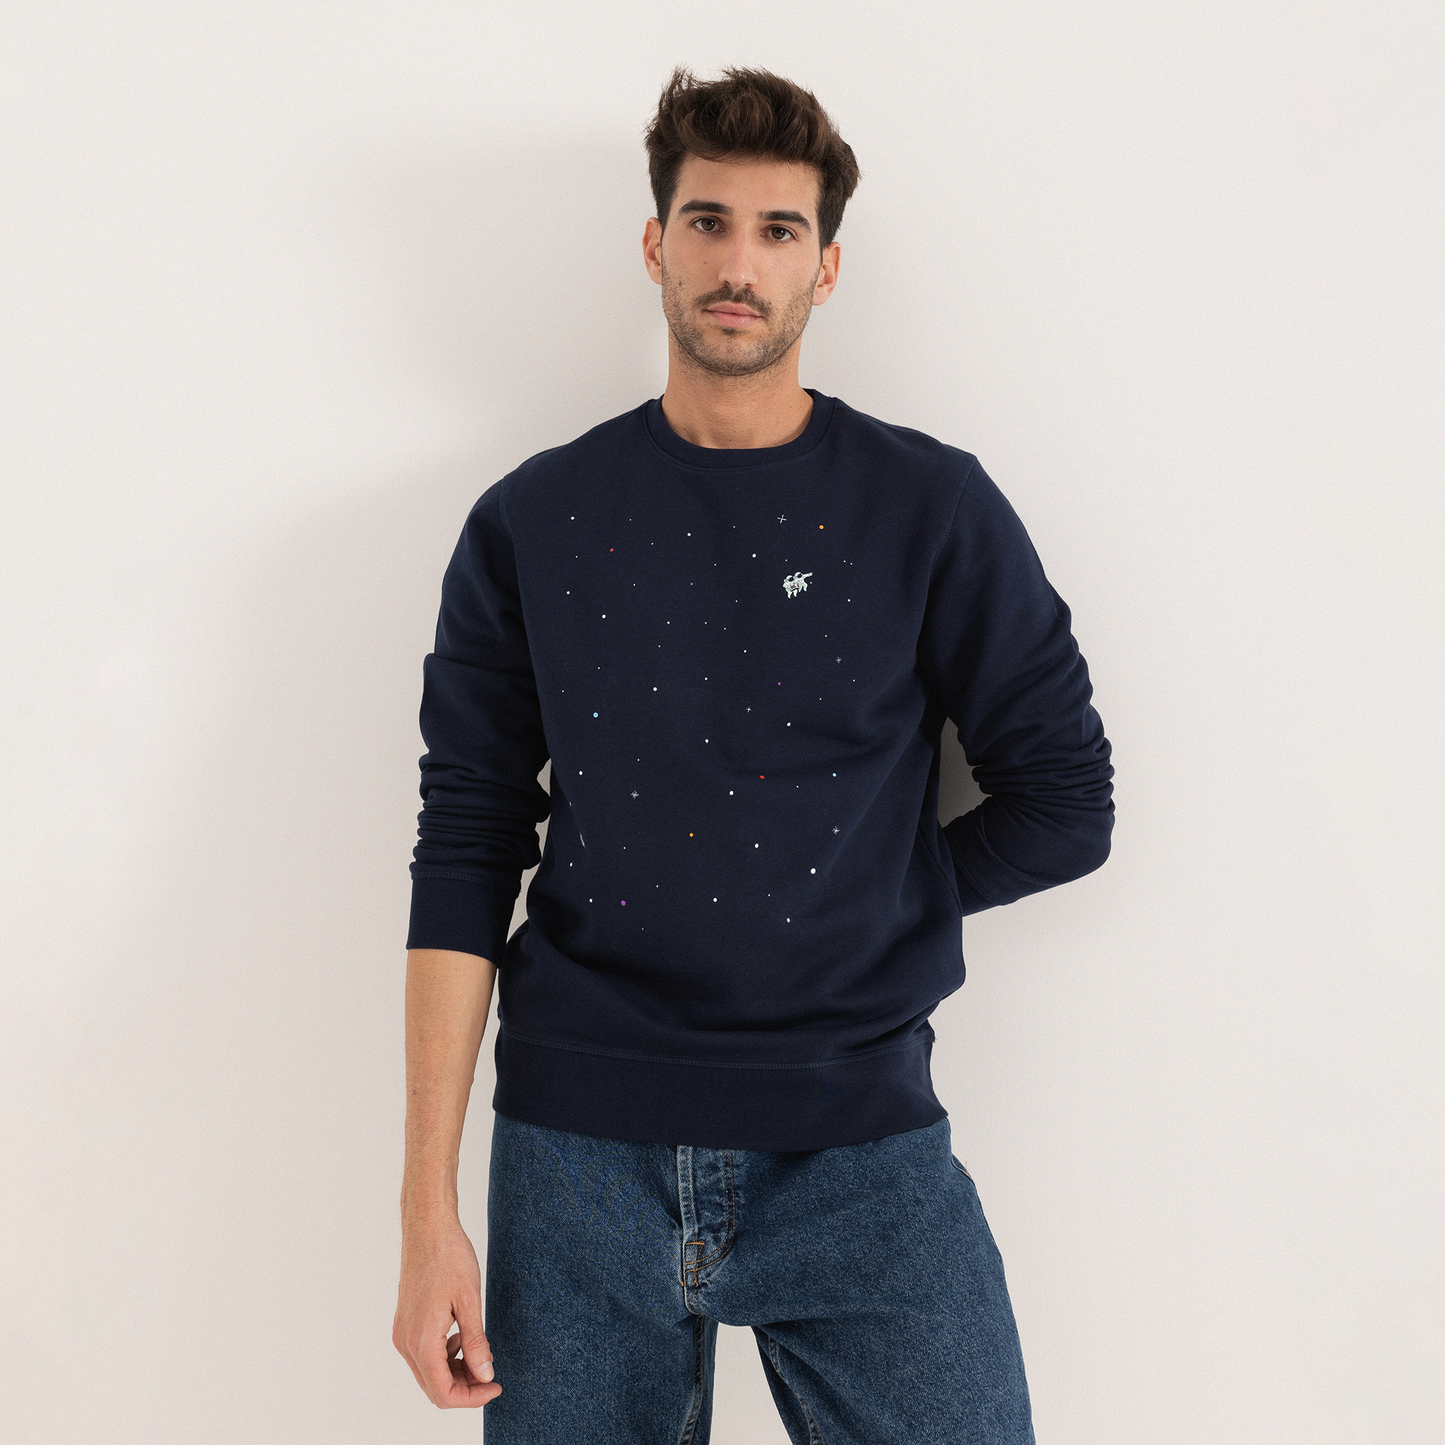 Lost in Space - Sweatshirt